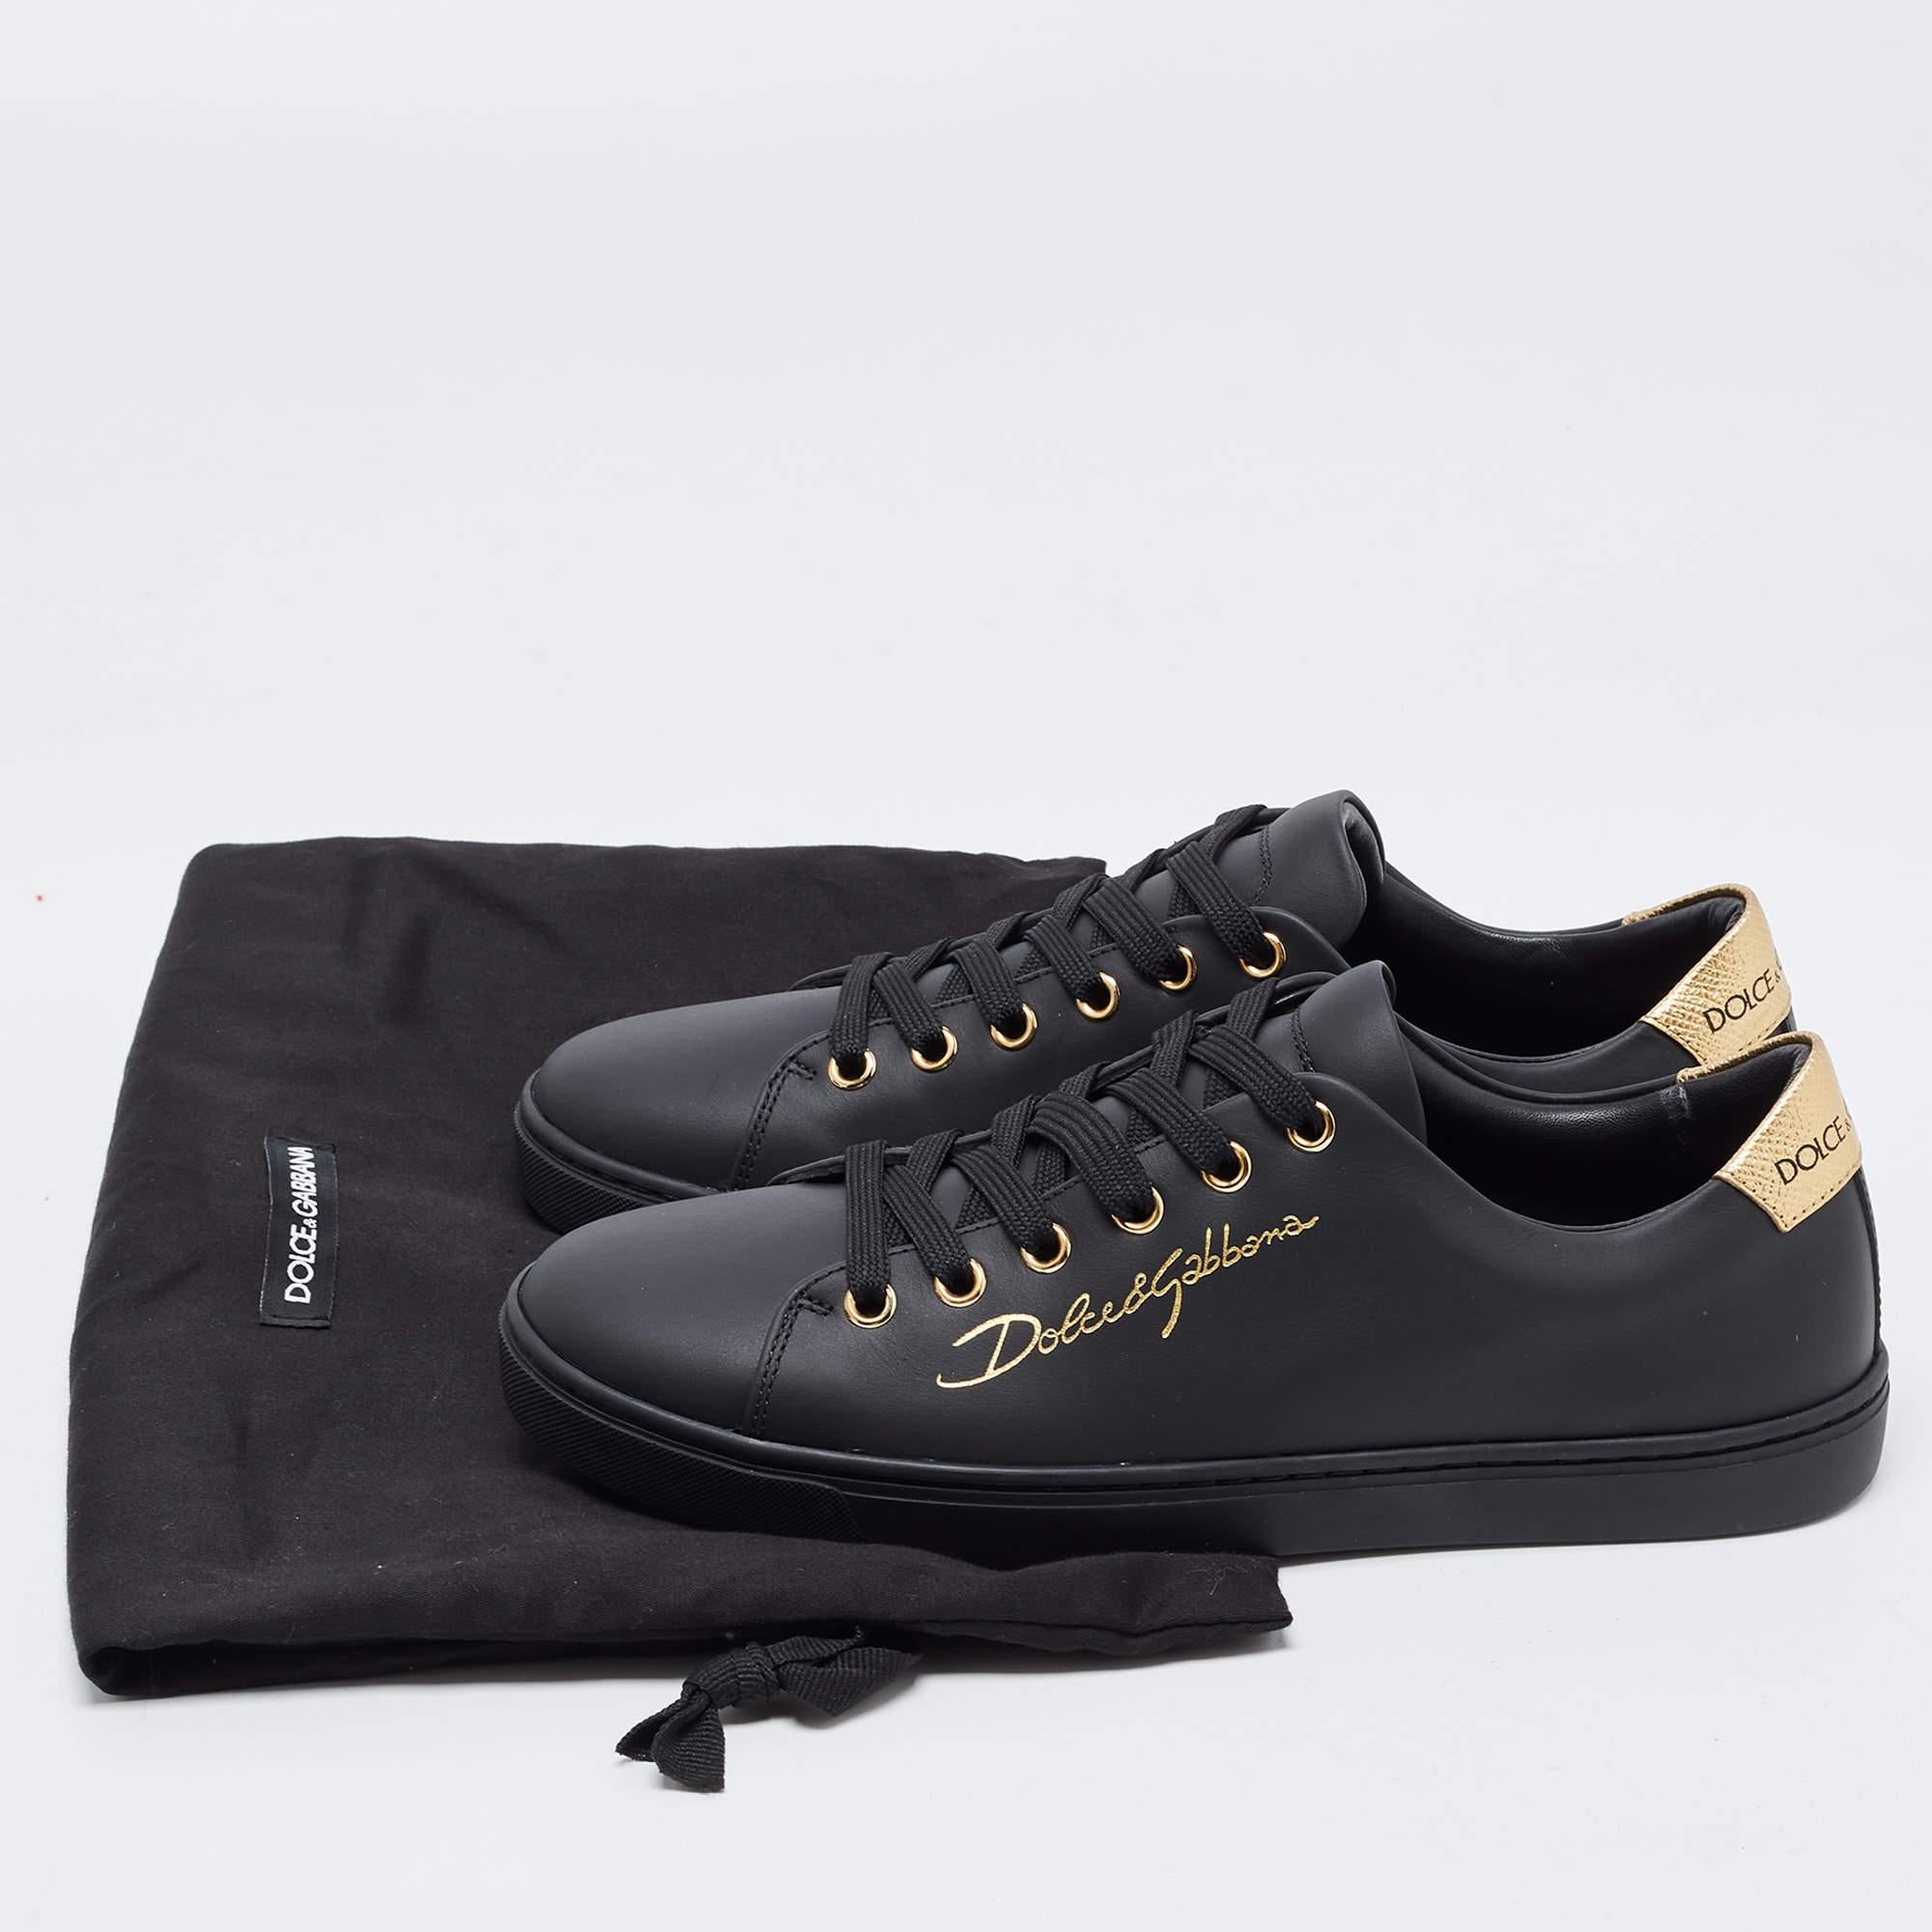 Dolce & Gabbana Black Leather Portofino Low Top Sneakers Size 37.5 5